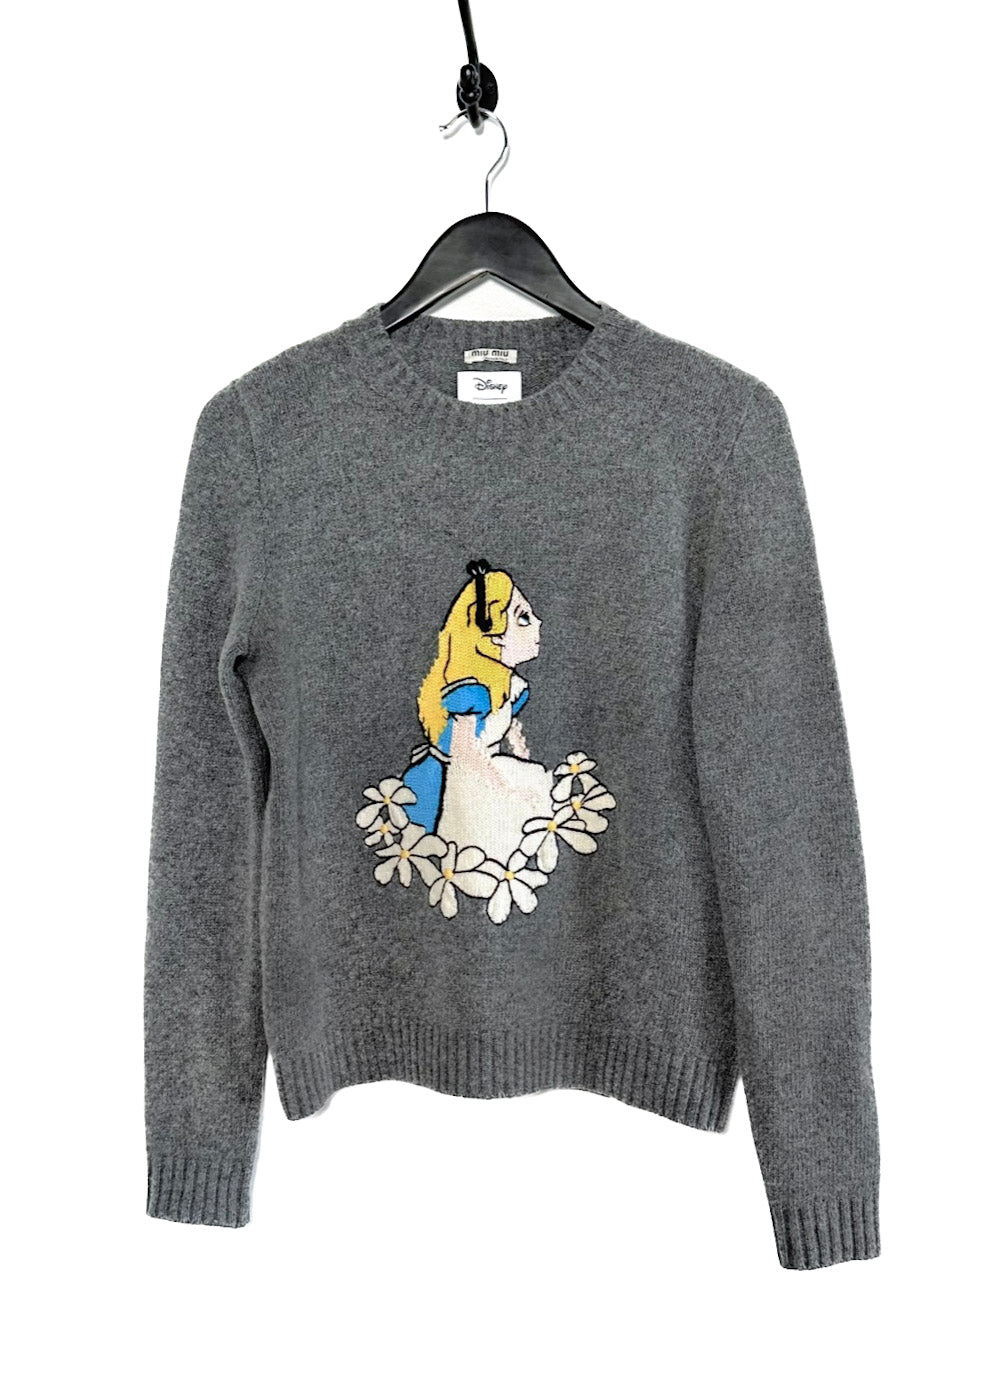 Miu Miu X Disney Alice in Wonderland Grey Wool Sweater